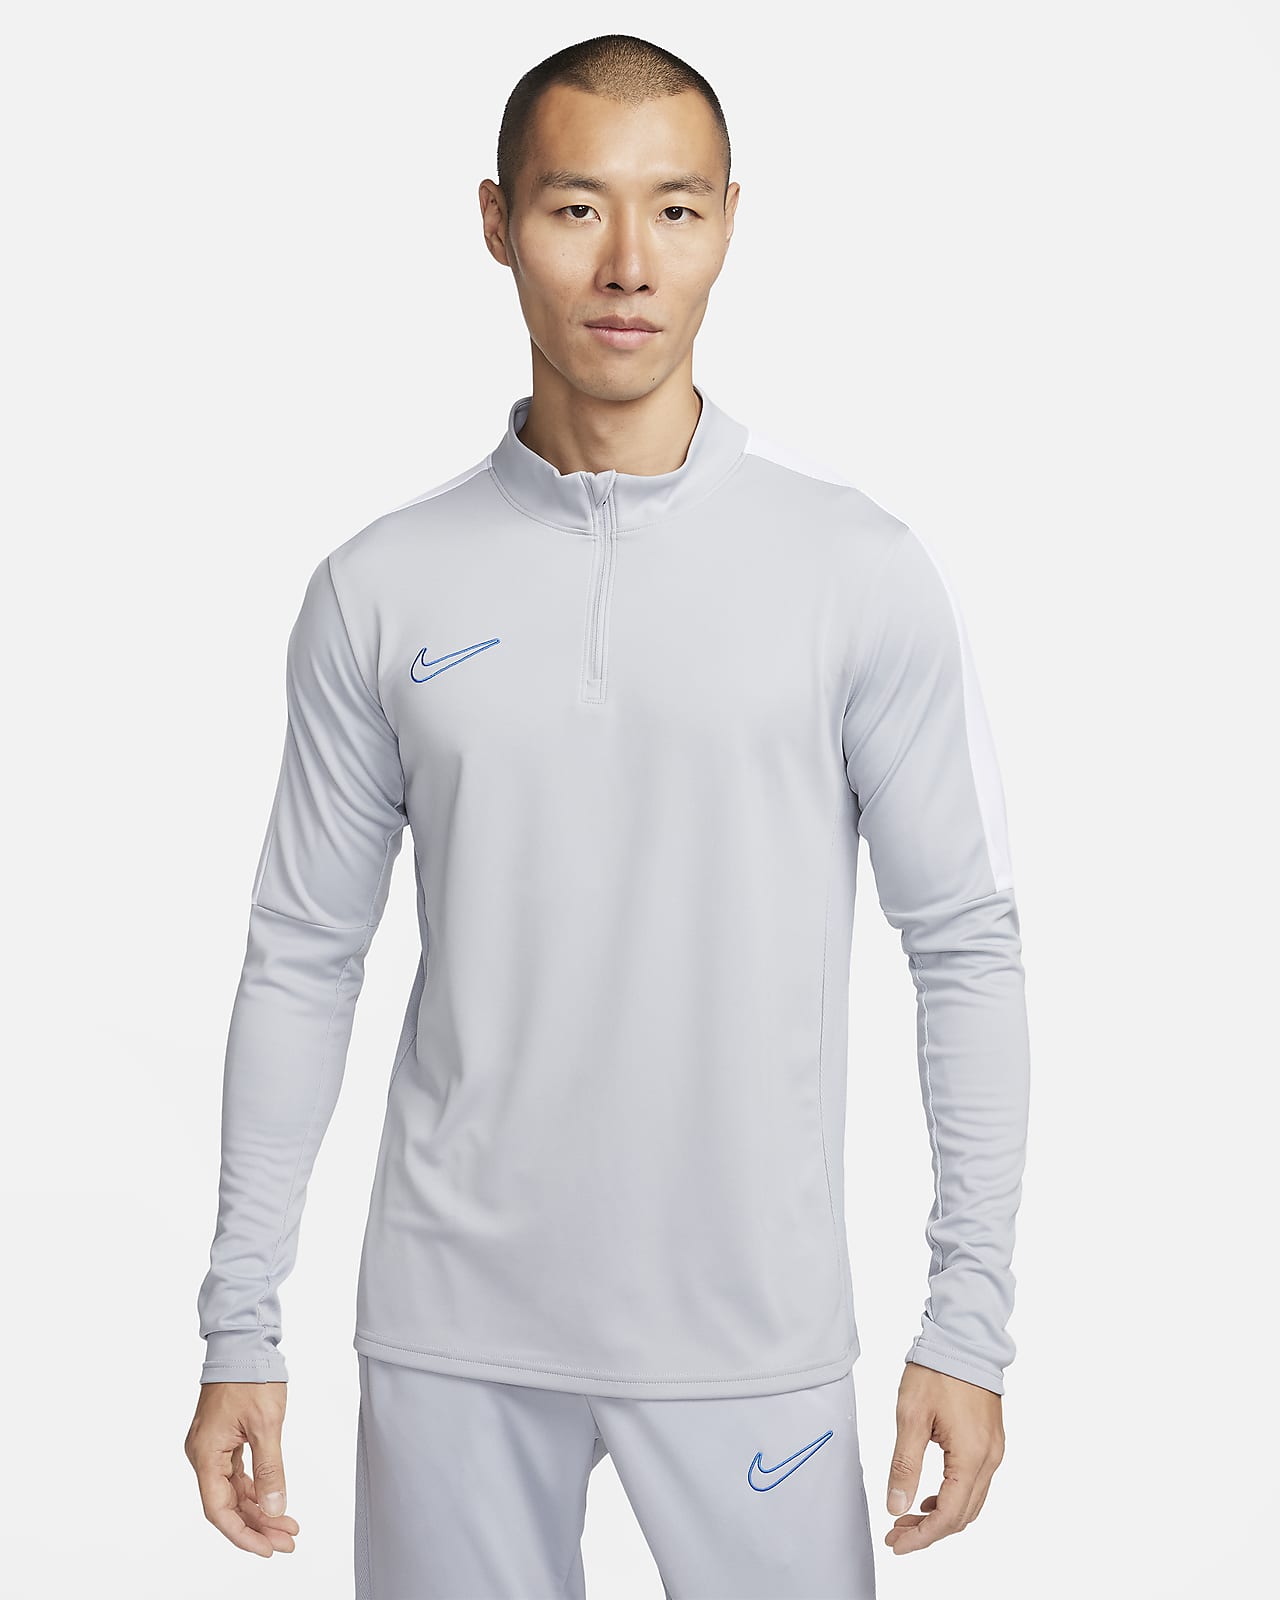 Pánské fotbalové tričko Nike Academy Dri-FIT s polovičním zipem